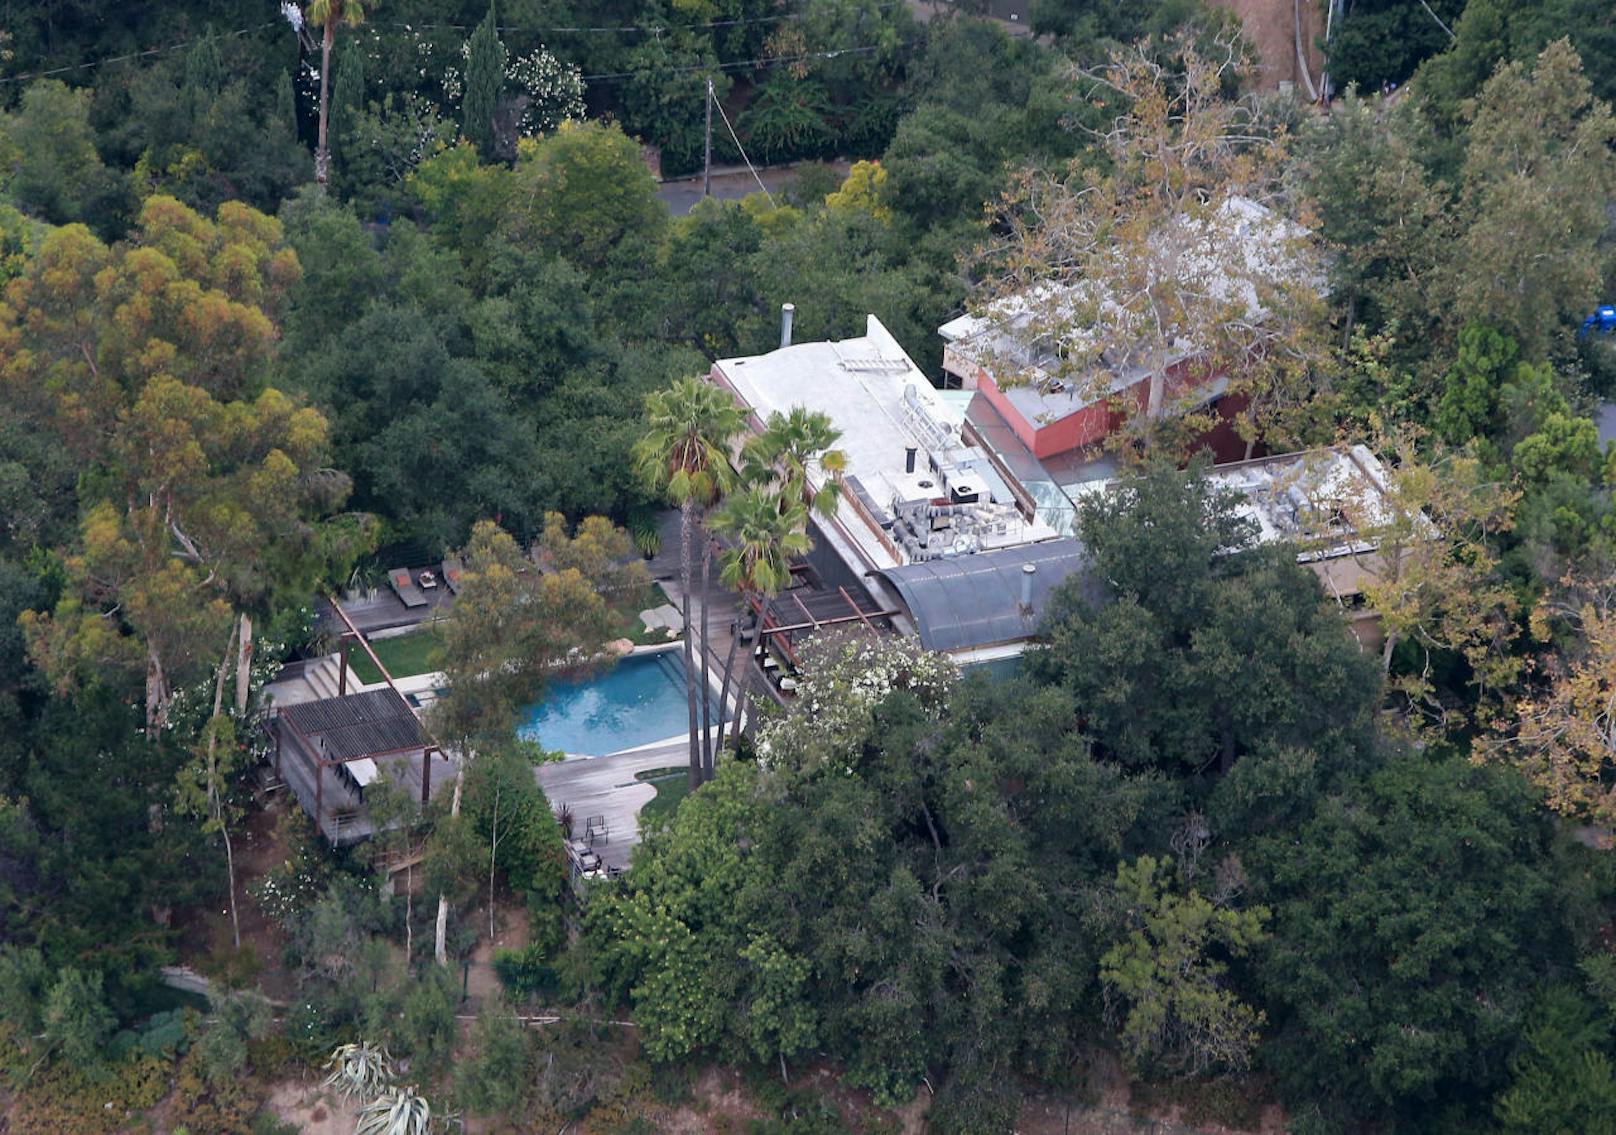 Das Haus von Demi Moore in LA mit dem Unglückspool